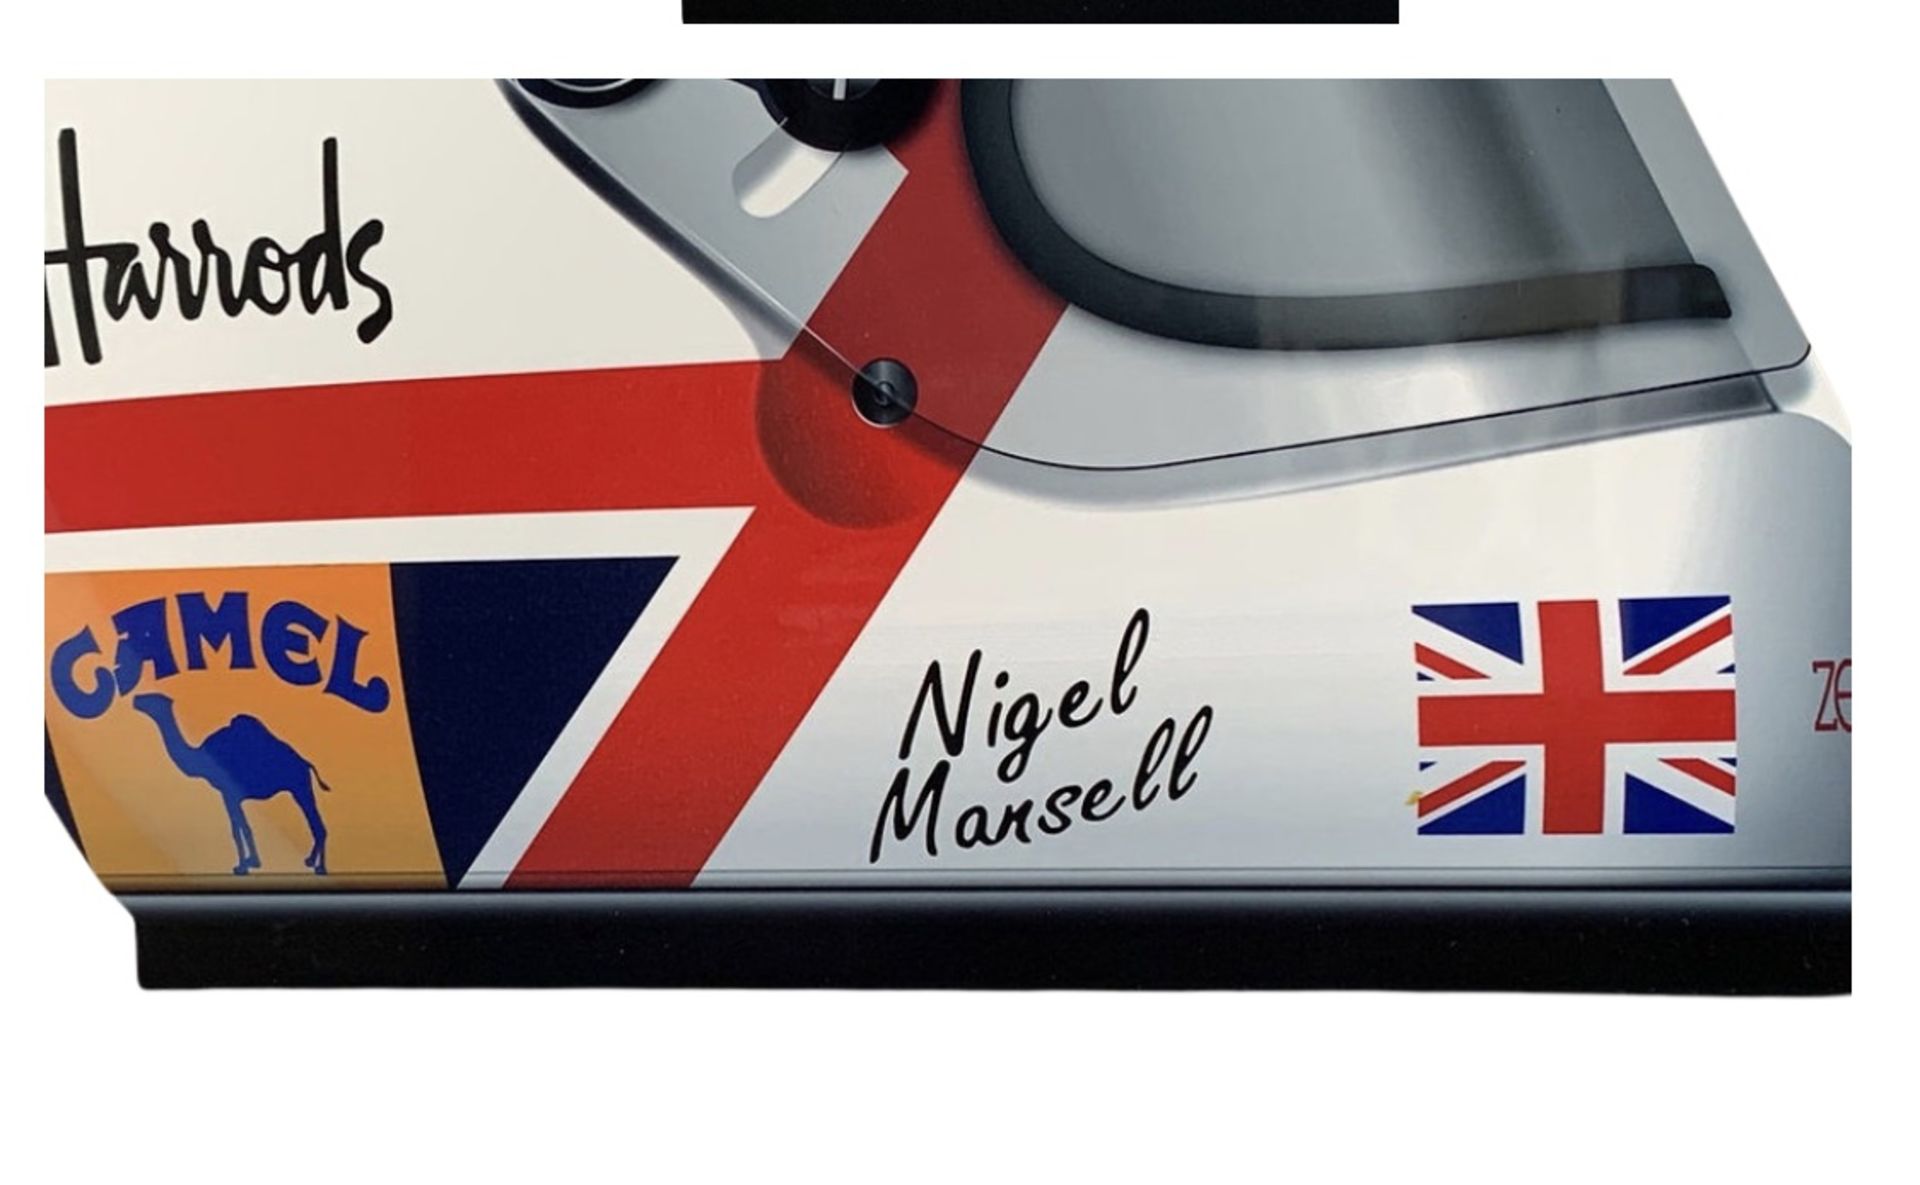 Nigel Mansell F1 Helmet Aluminum Garage Wall Display - Image 4 of 5